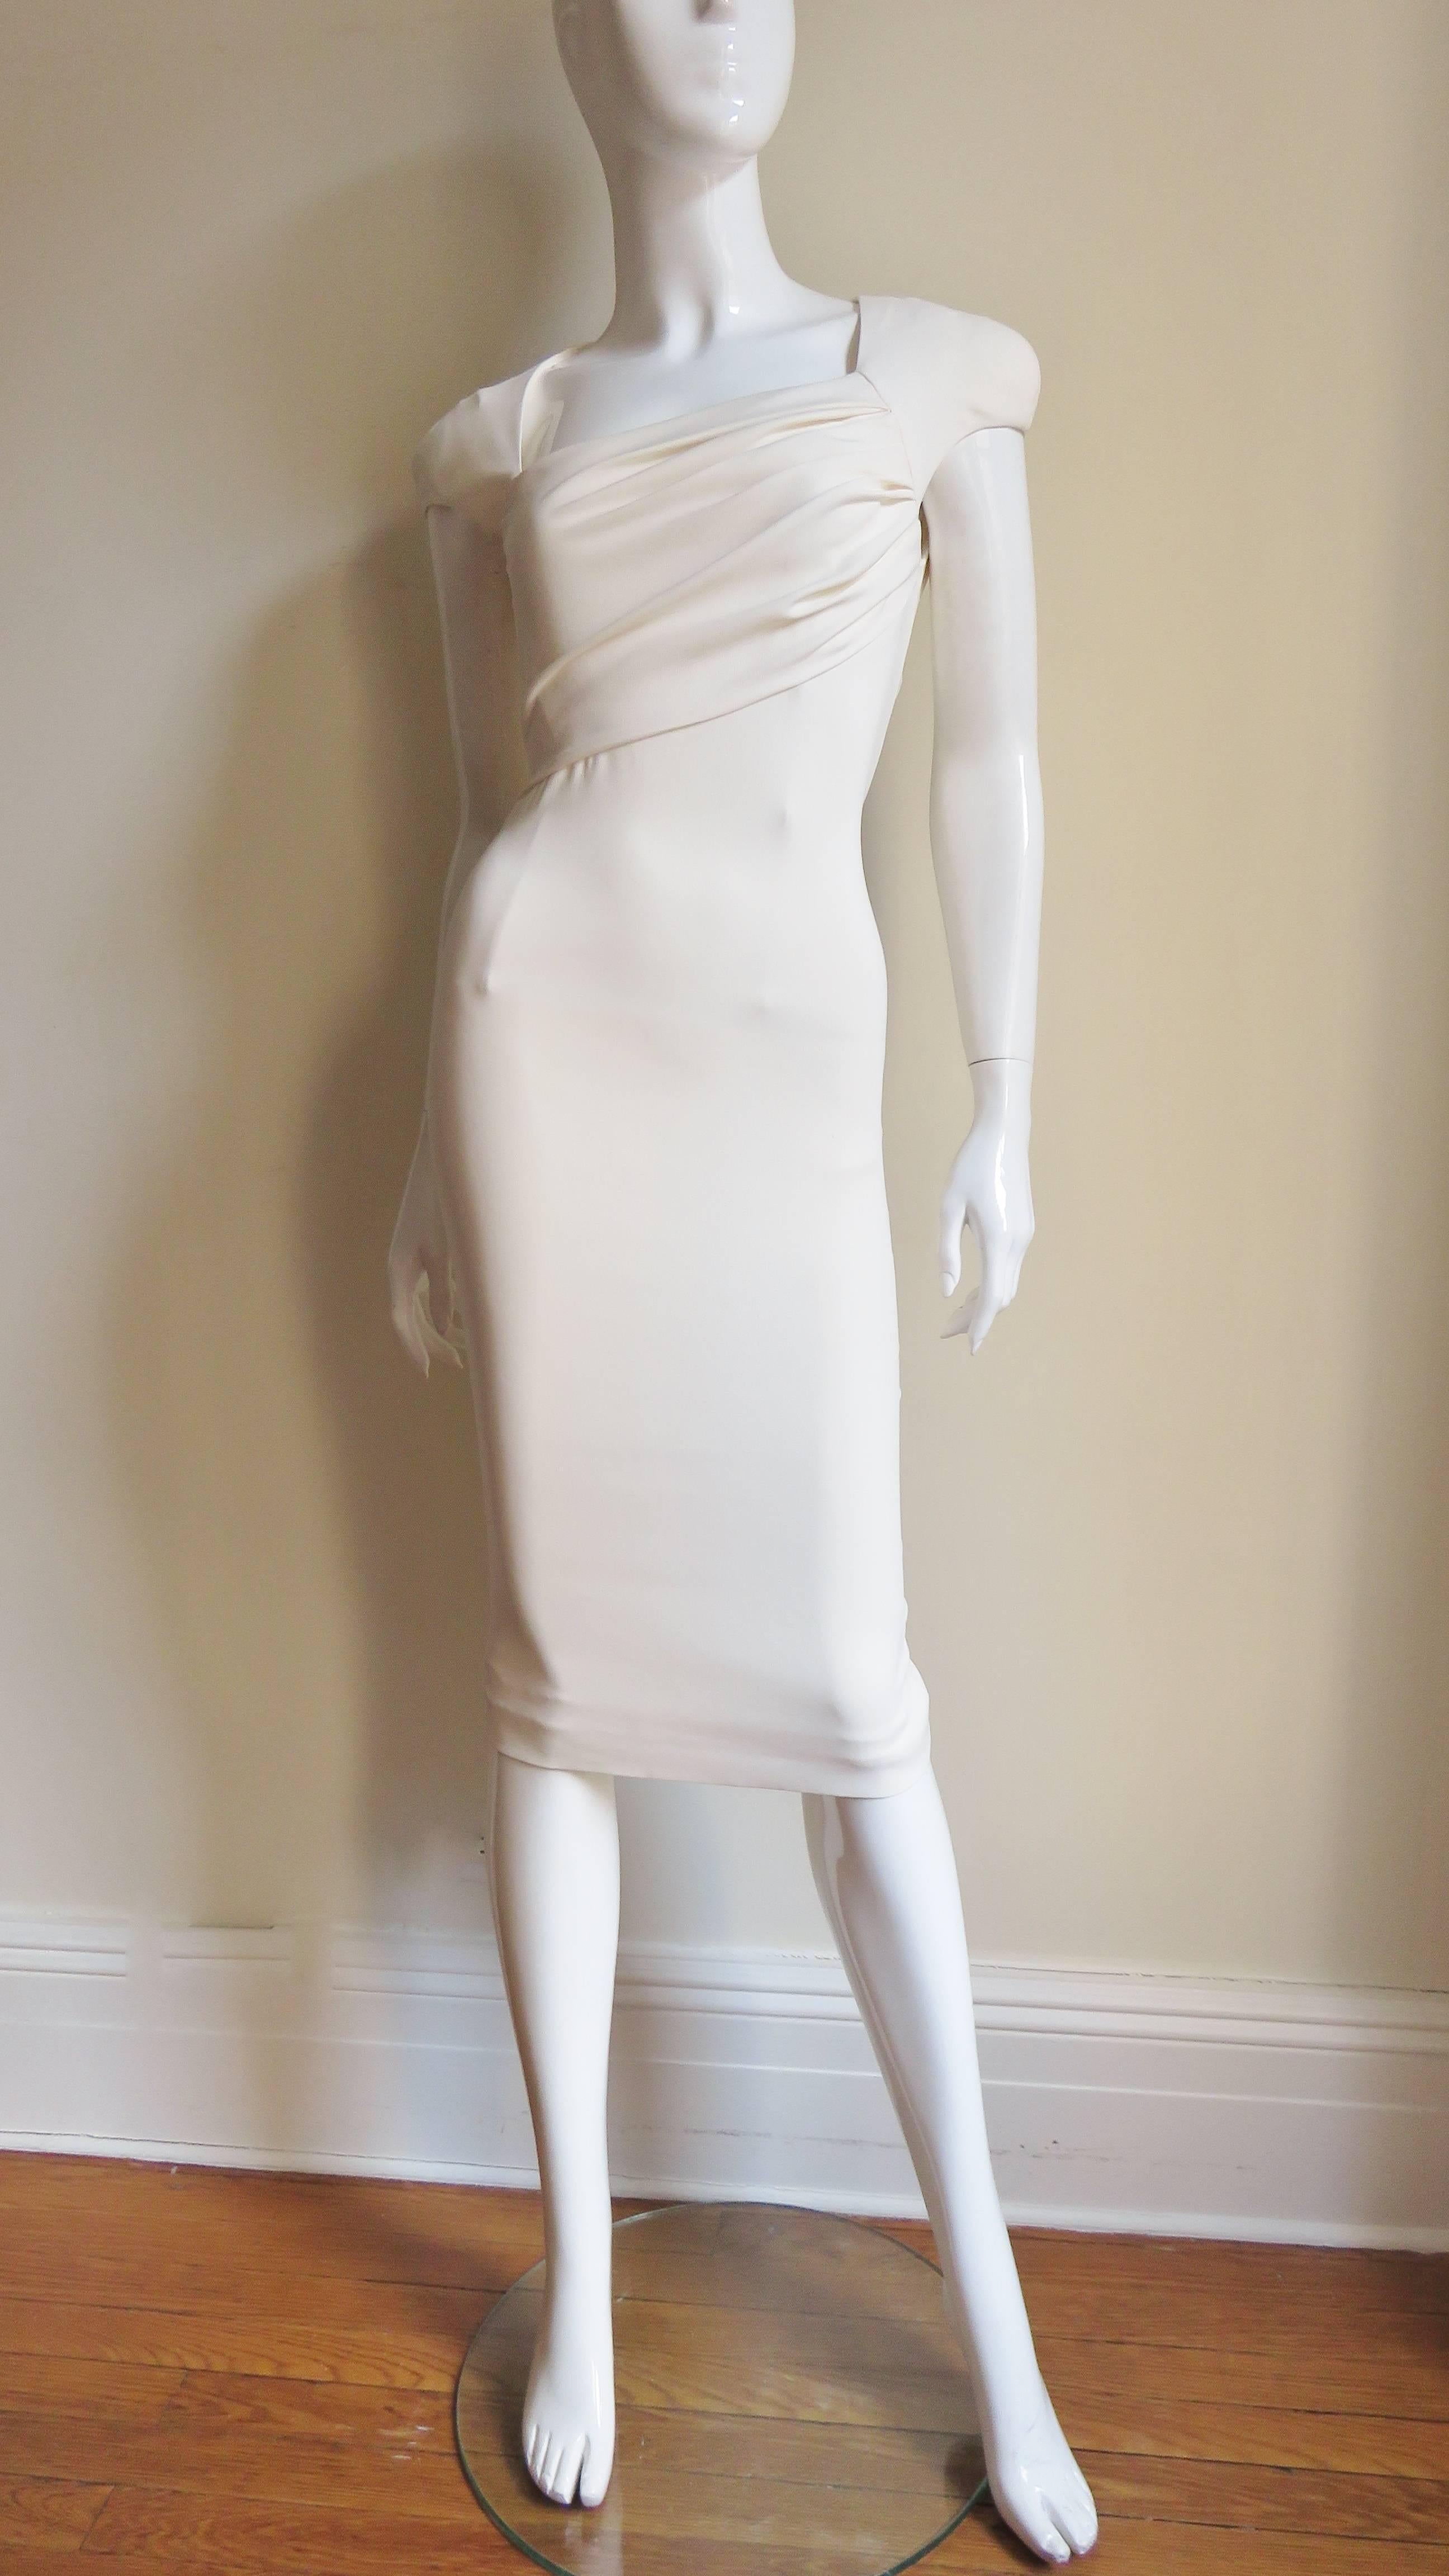 Gray Iconic Tom Ford Academy Award Gwyneth Paltrow New Dress & Cape 